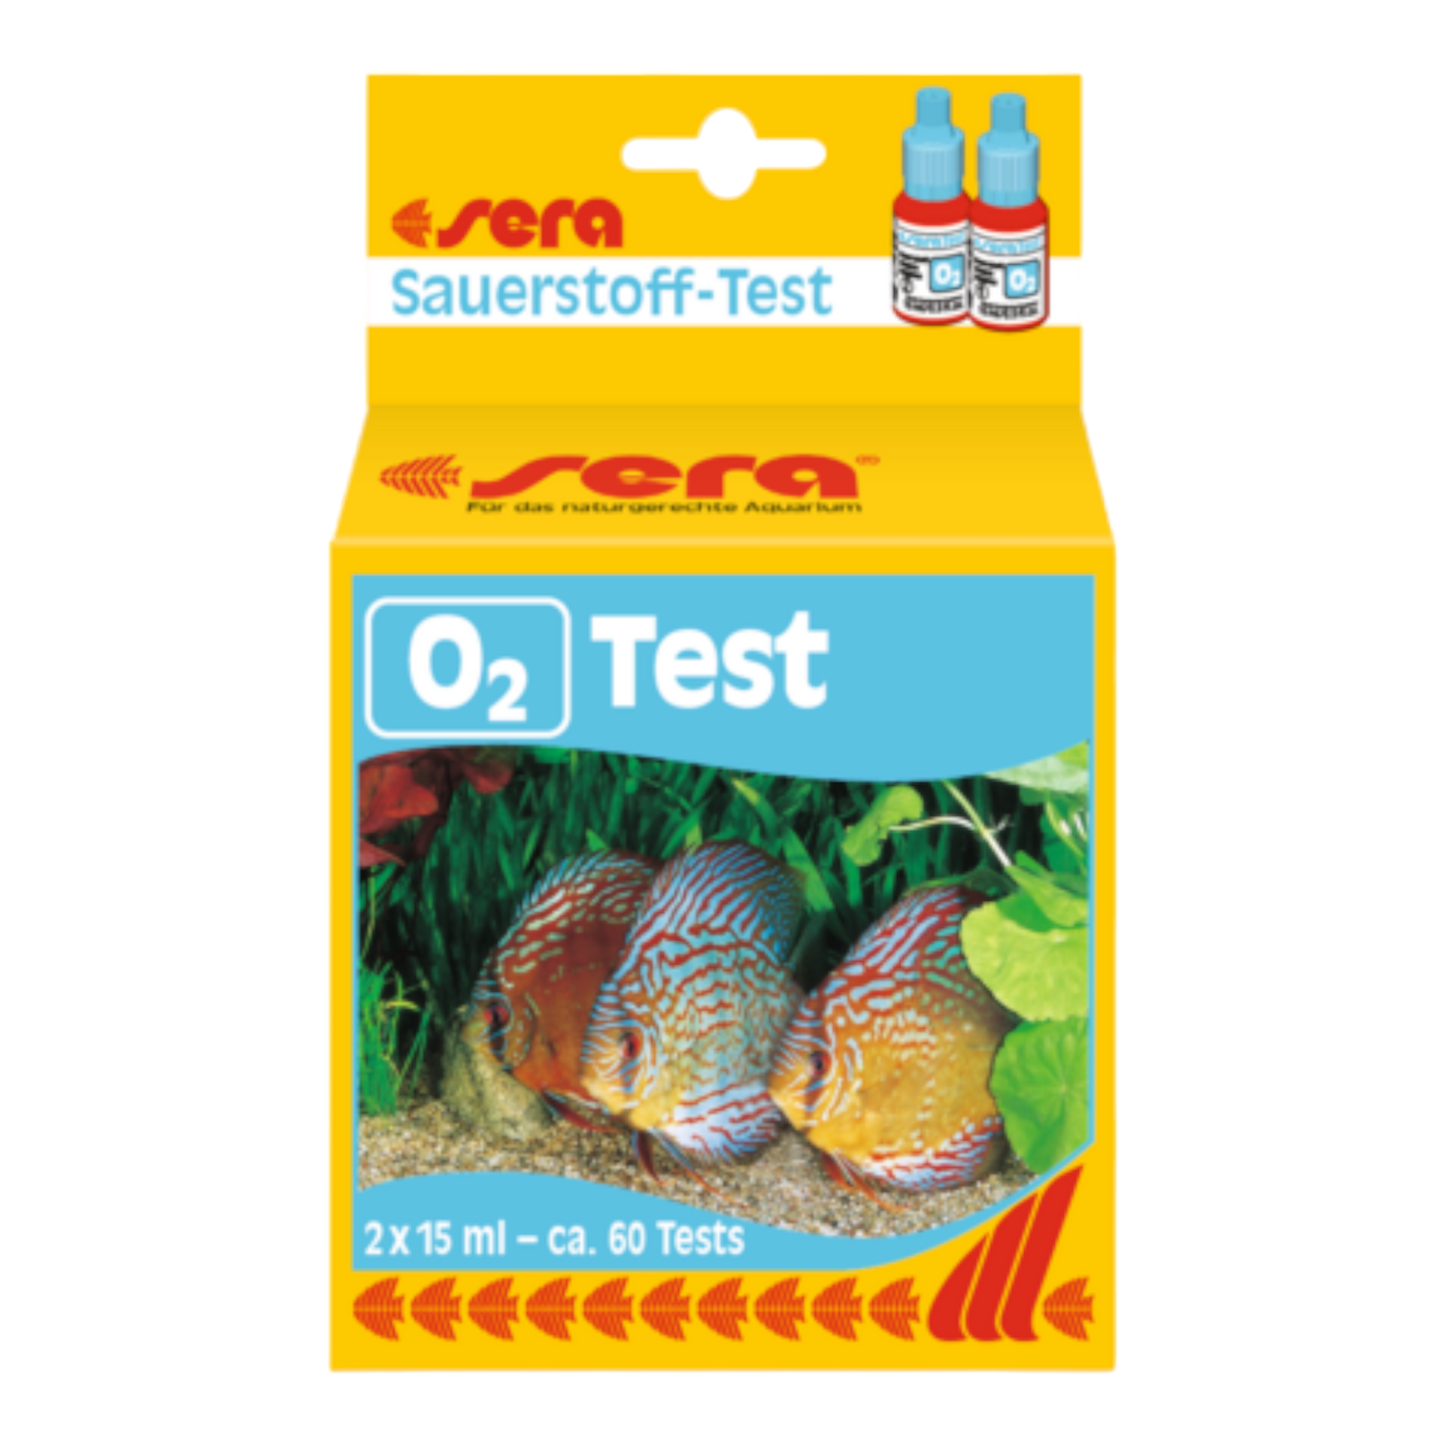 sera Sauerstoff-Test (O2)